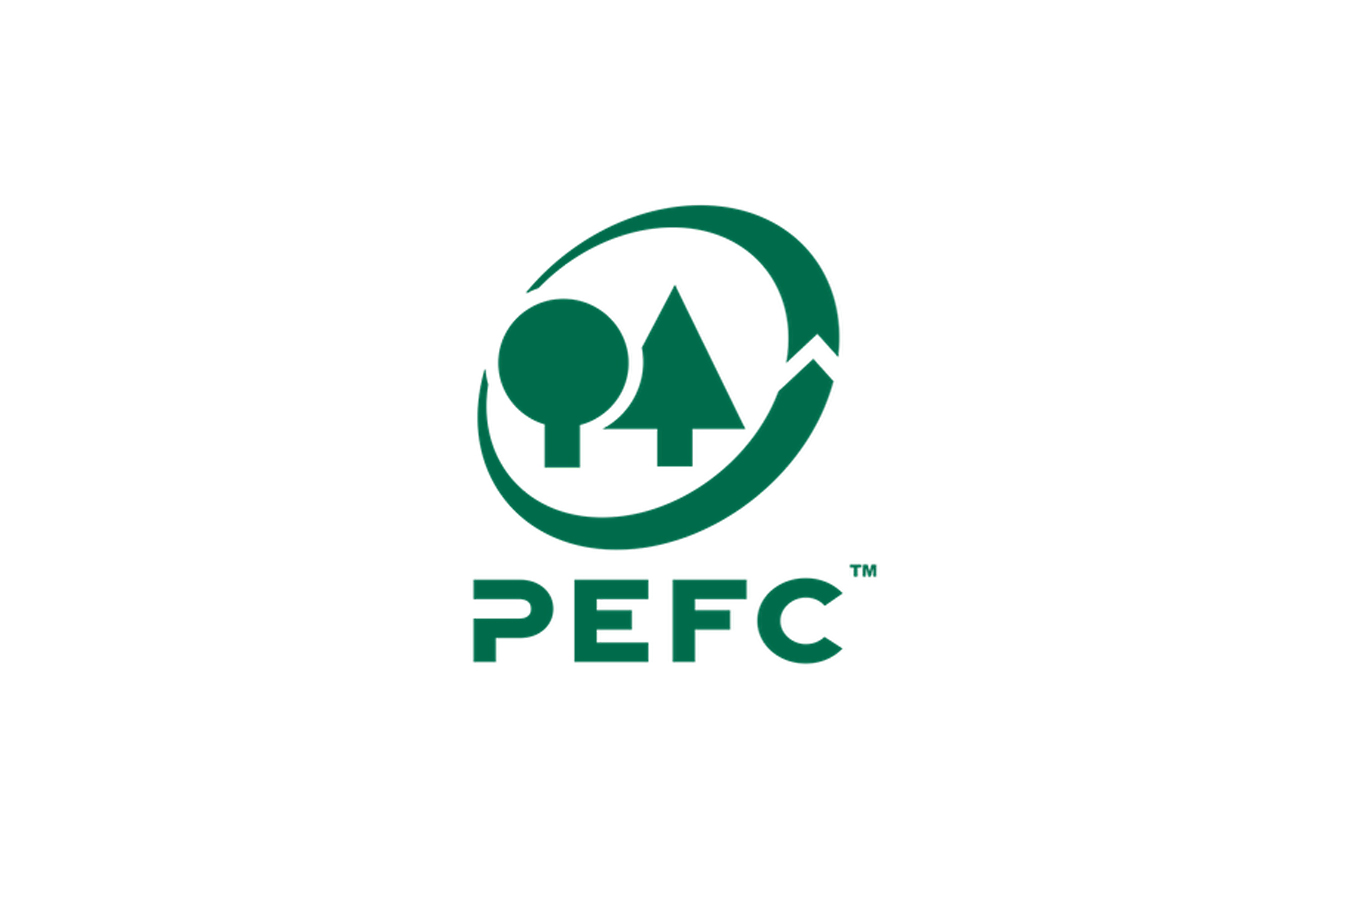 [Translate to english:] pefc logo